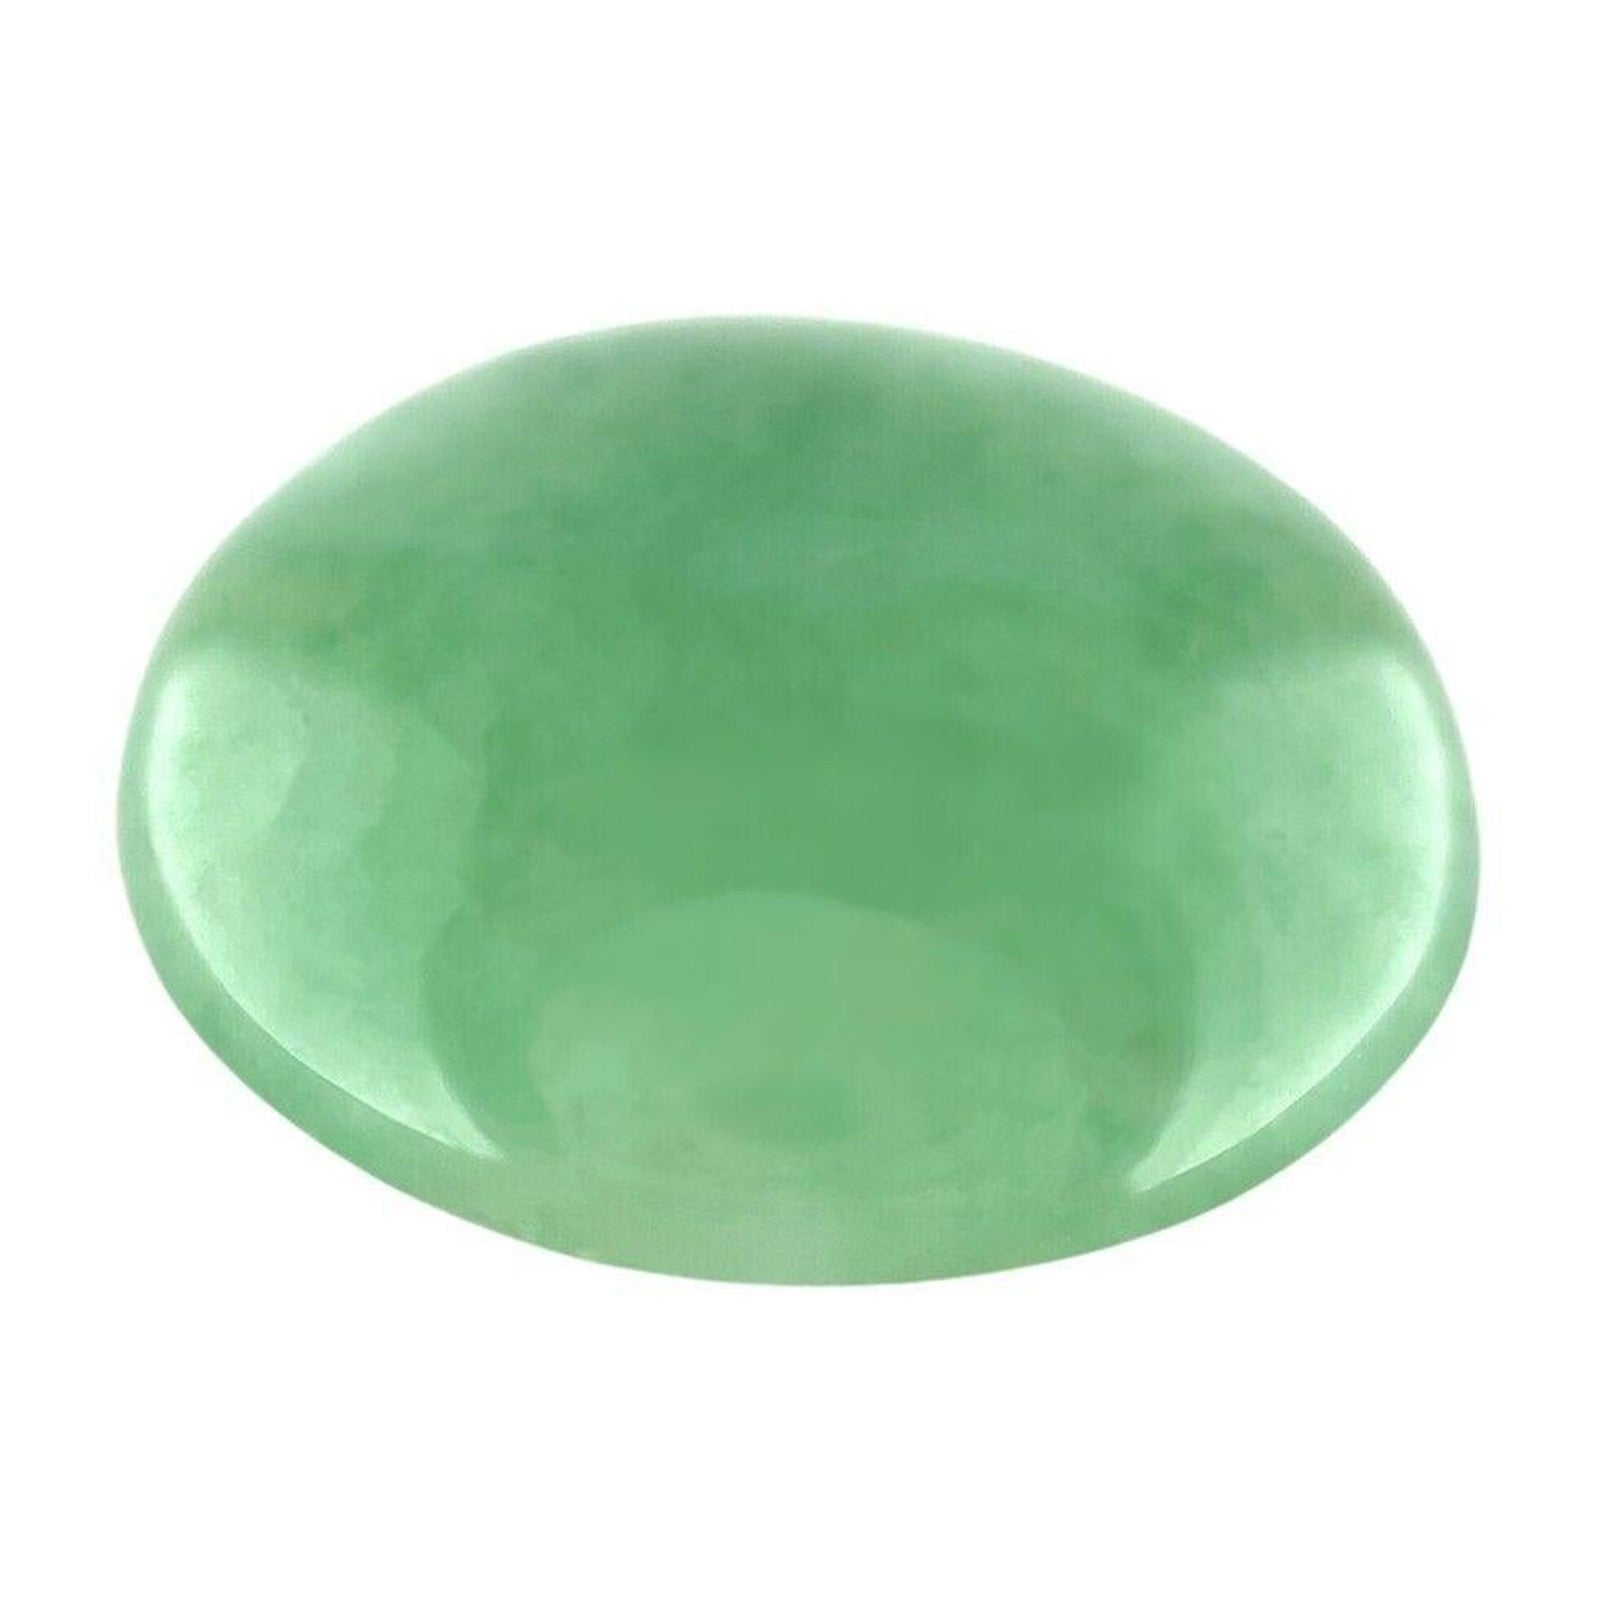 9.87ct Green Jade Jade IGI Certified Natural 'A' Grade Oval Cabochon Gem